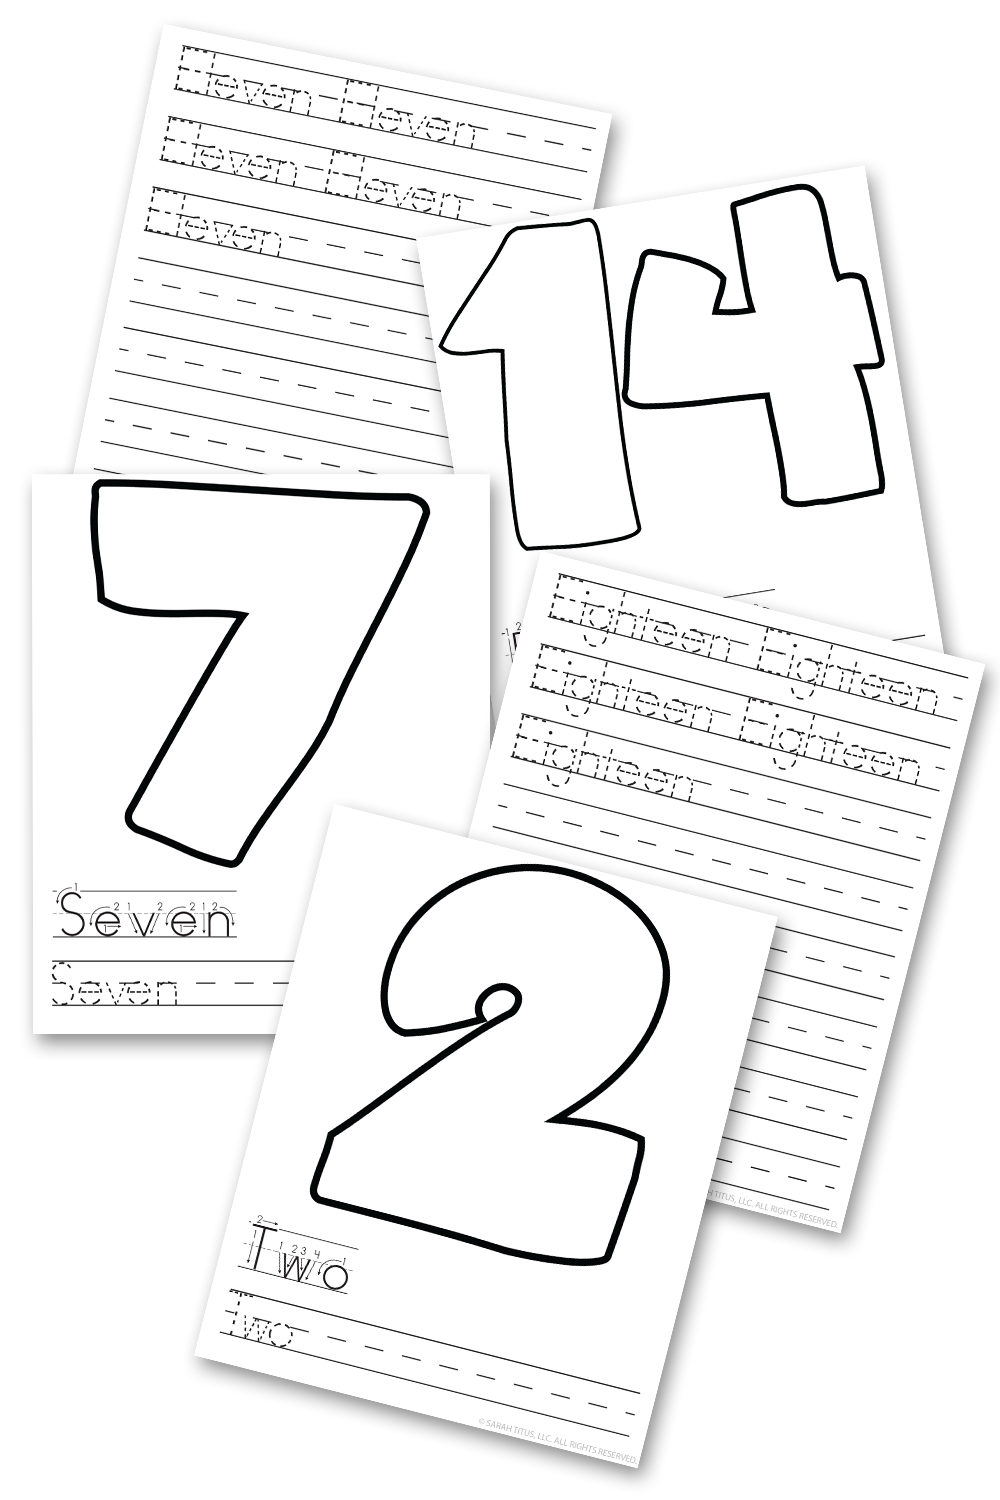 Numbers 1-20 Handwriting Practice Sheets